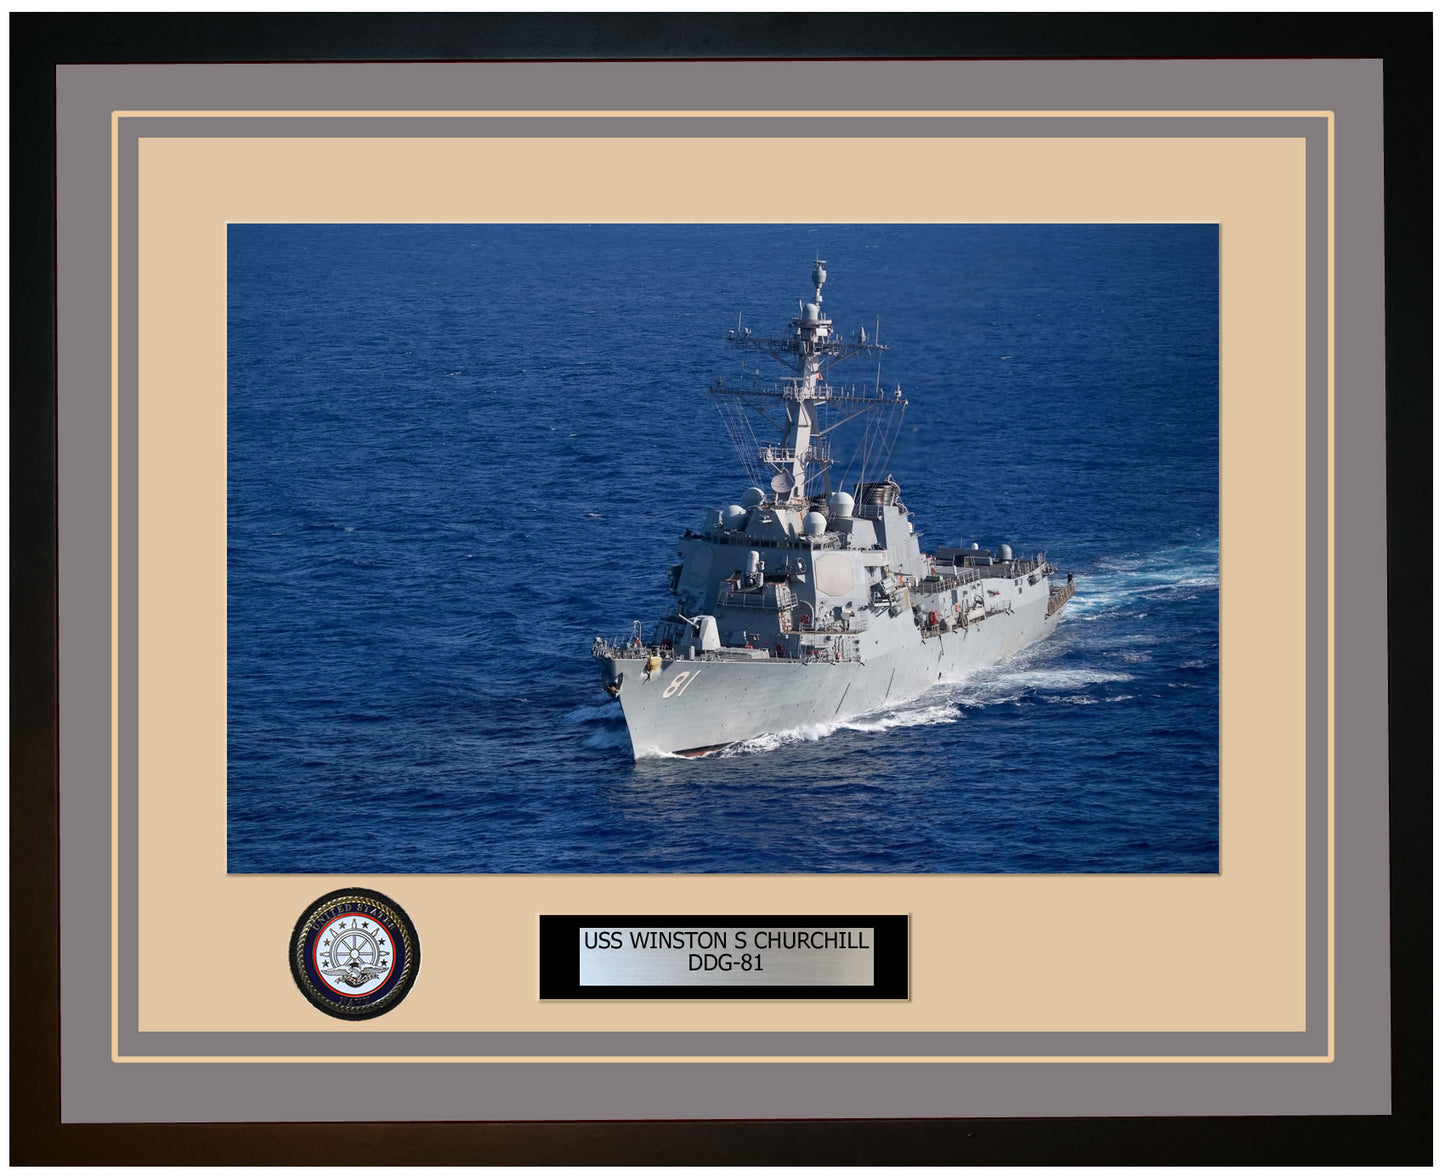 USS WINSTON S CHURCHILL DDG-81 Framed Navy Ship Photo Grey